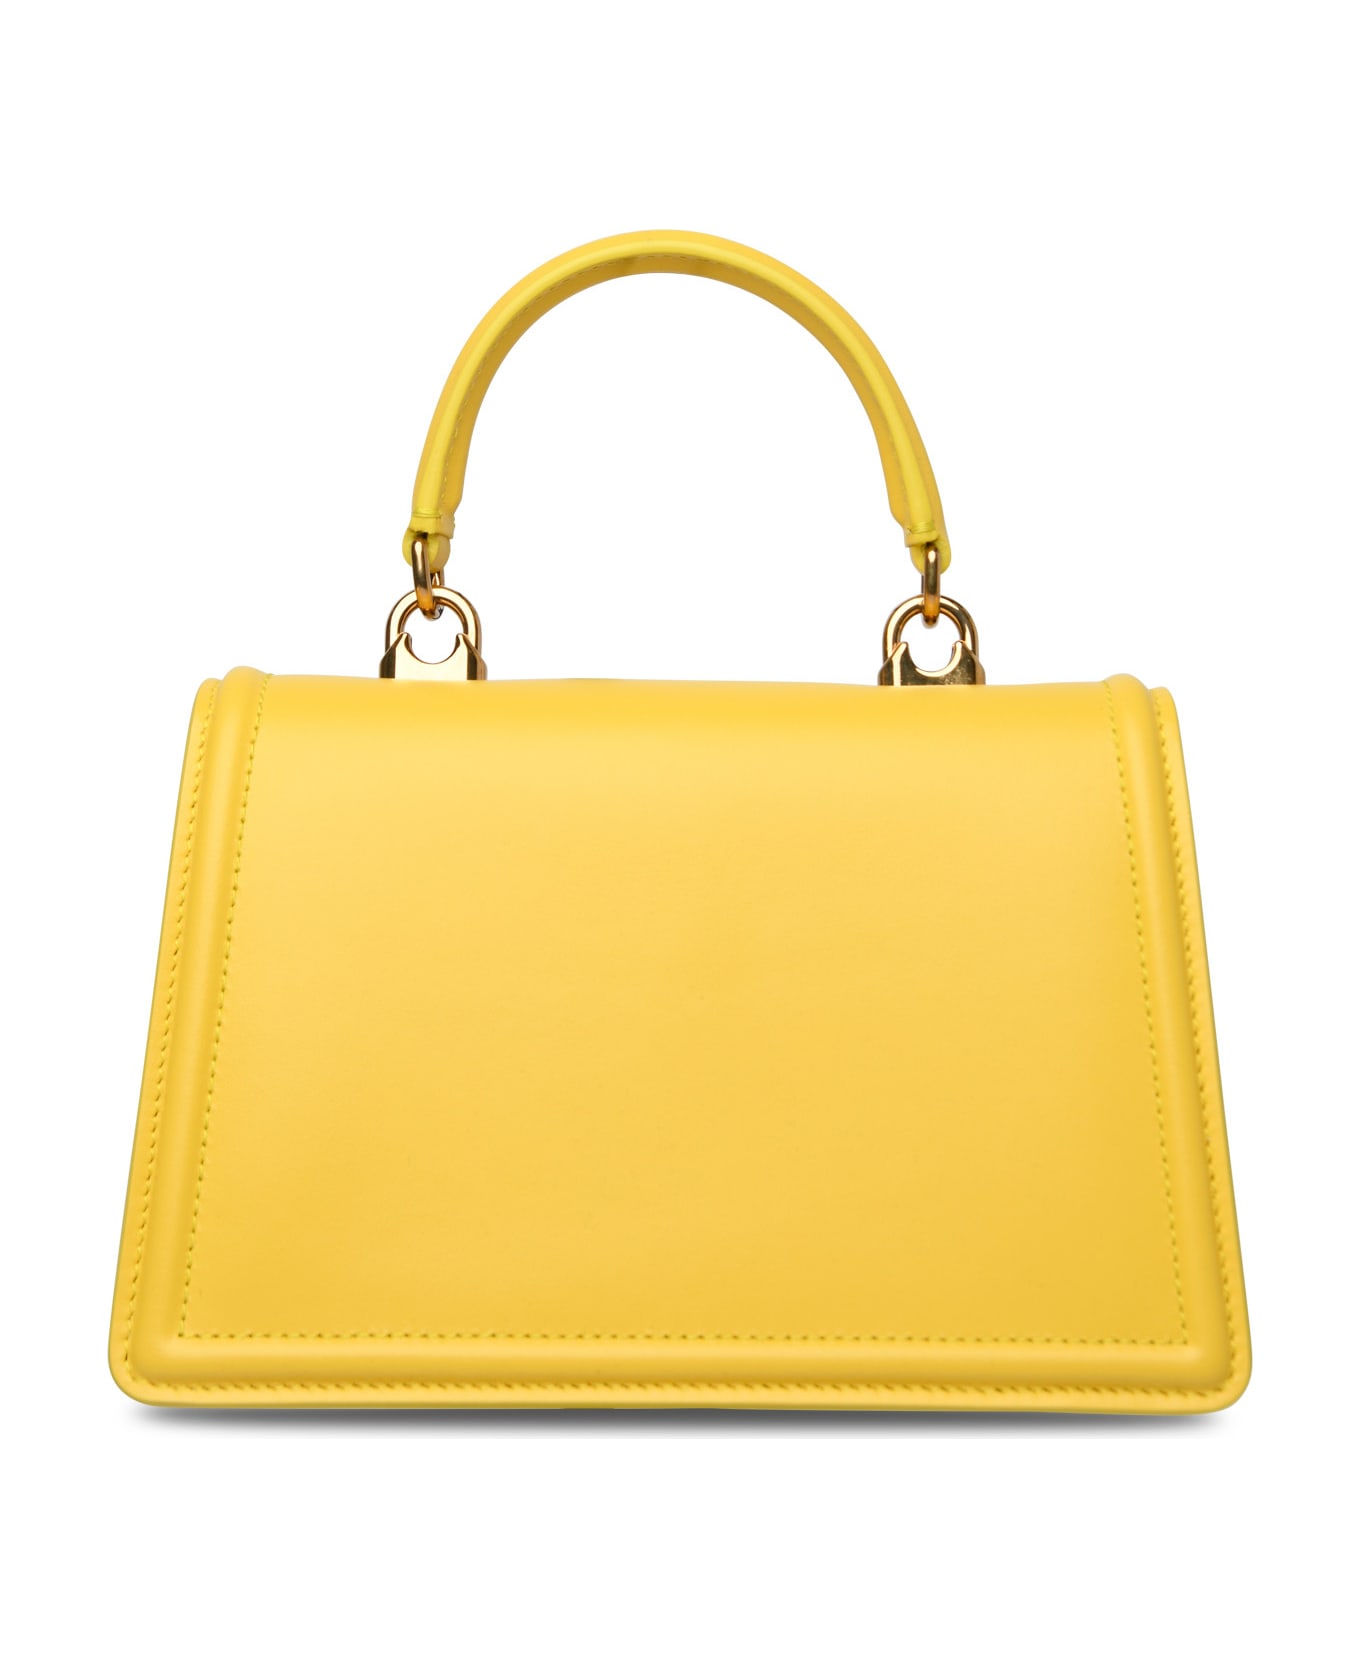 Dolce & Gabbana Devotion Bag Shoulder Bag - Yellow